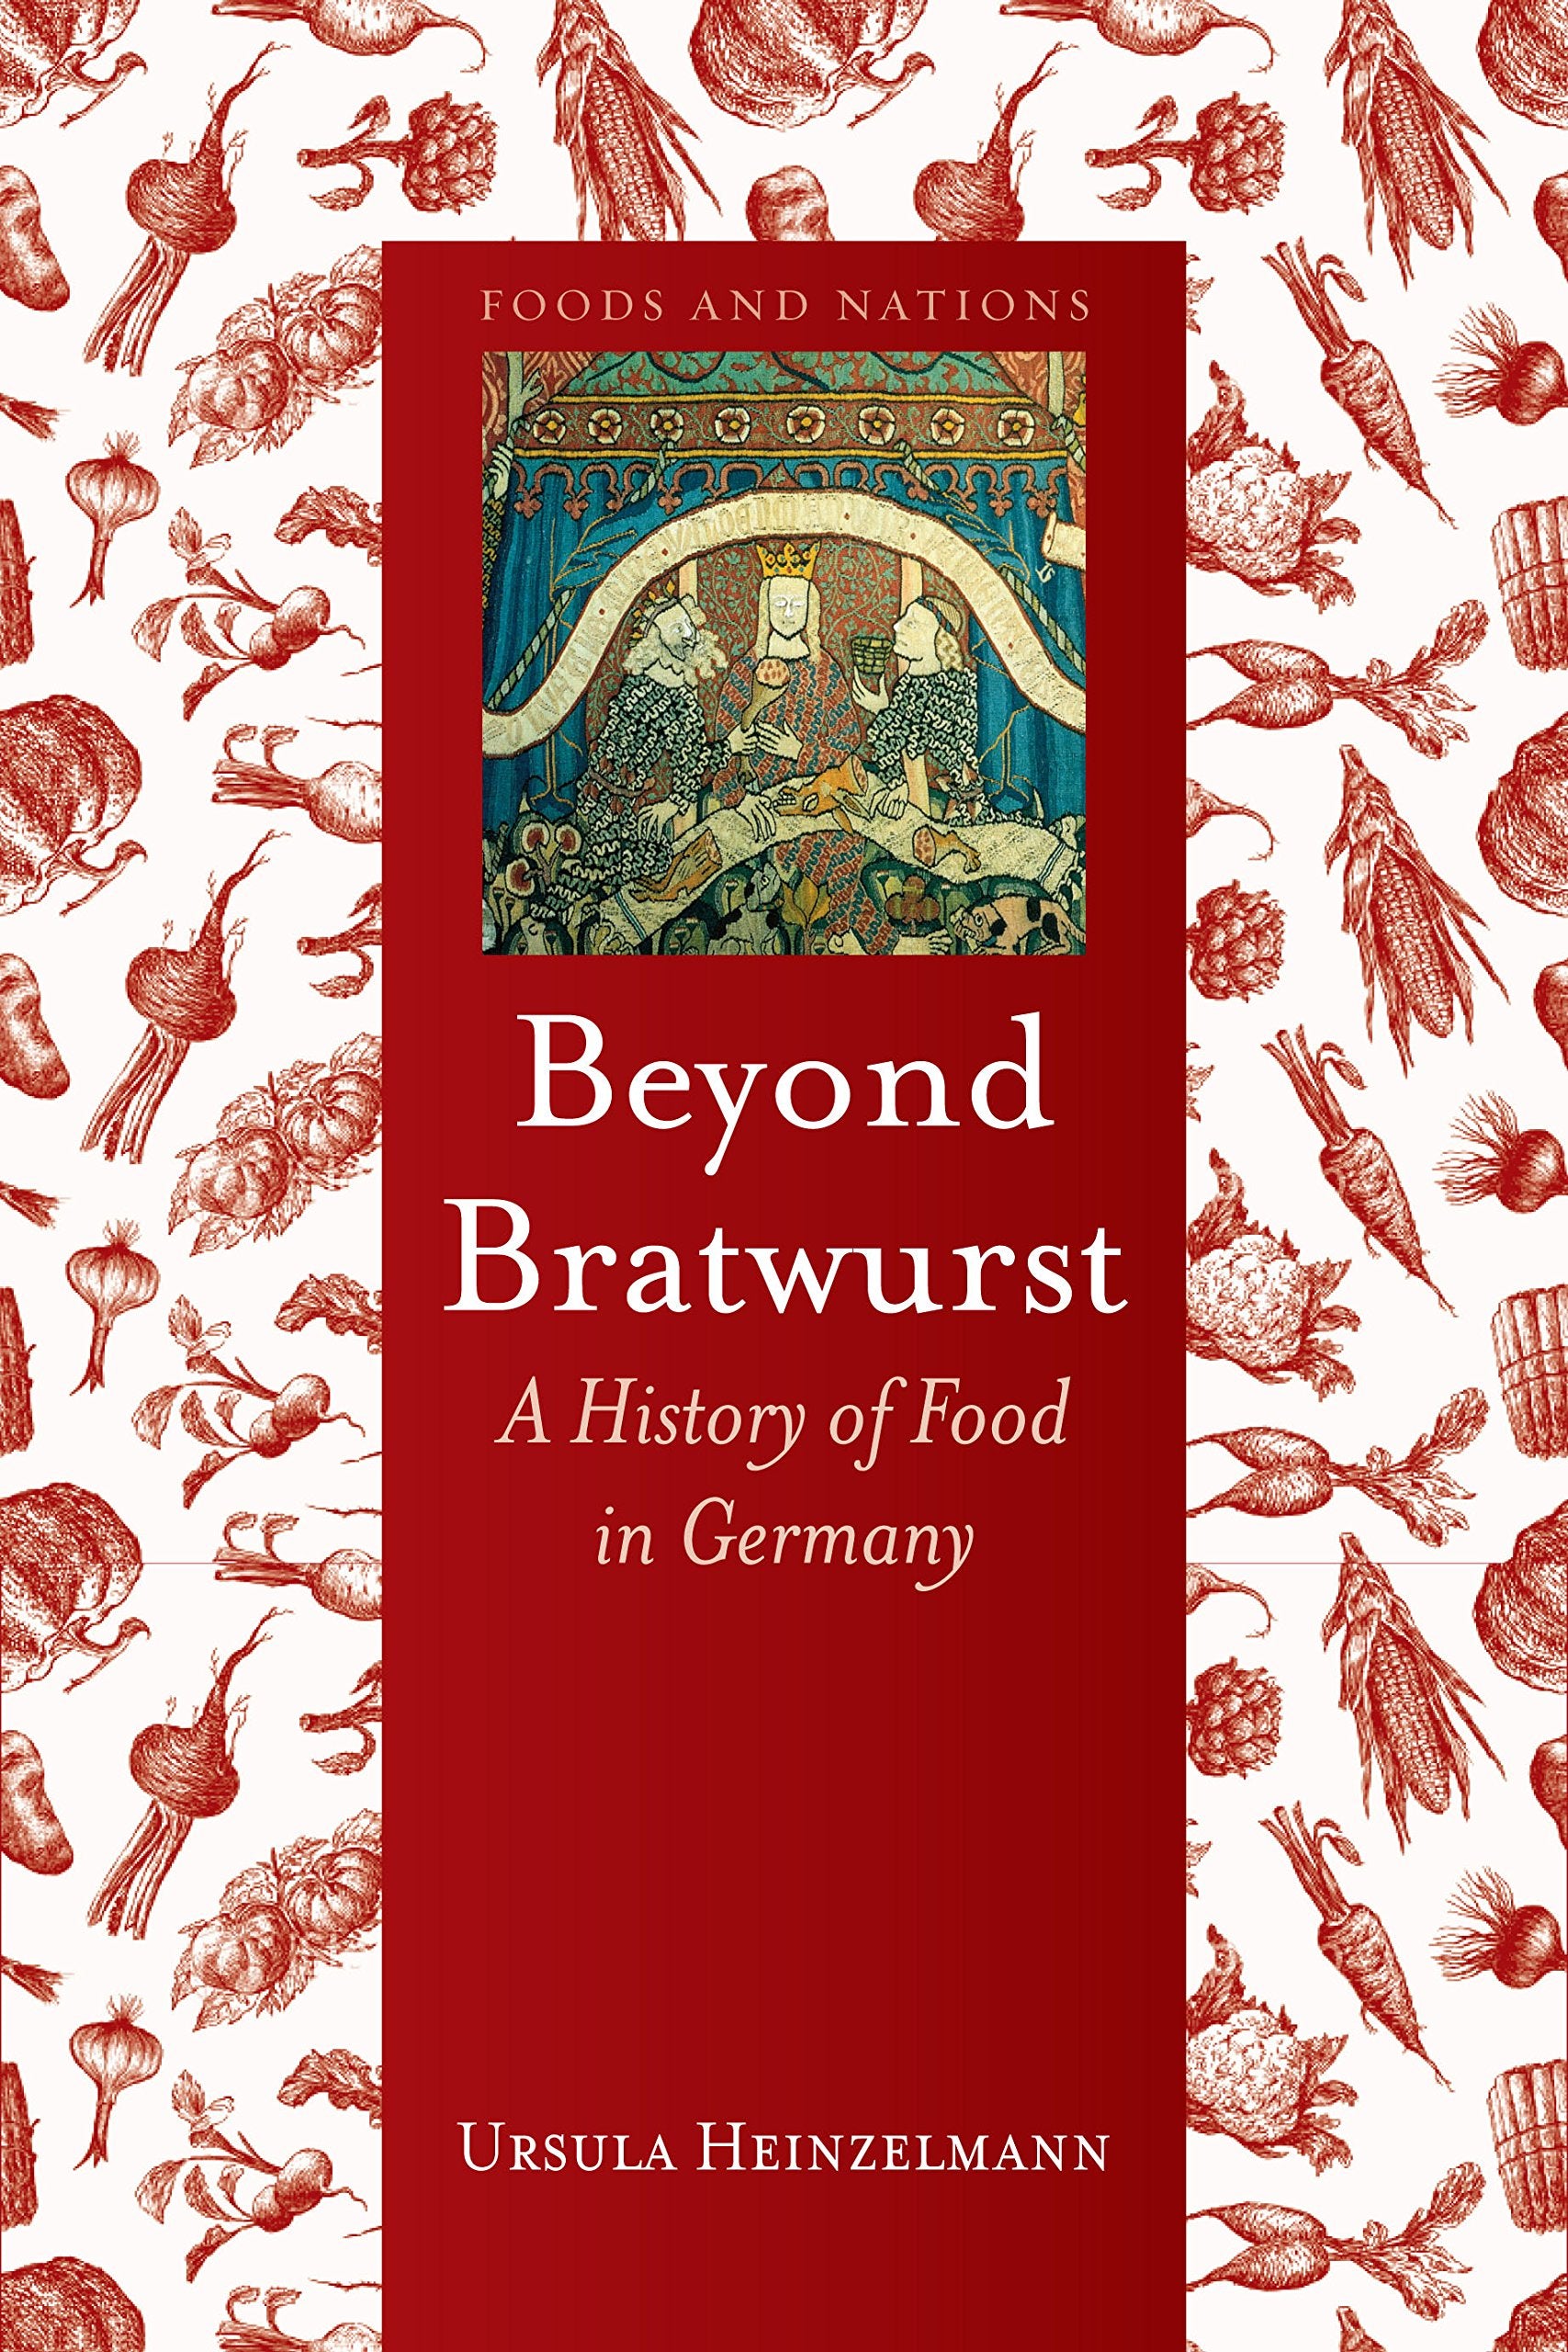 Beyond Bratwurst: A History of Food in Germany (Ursula Heinzelmann)